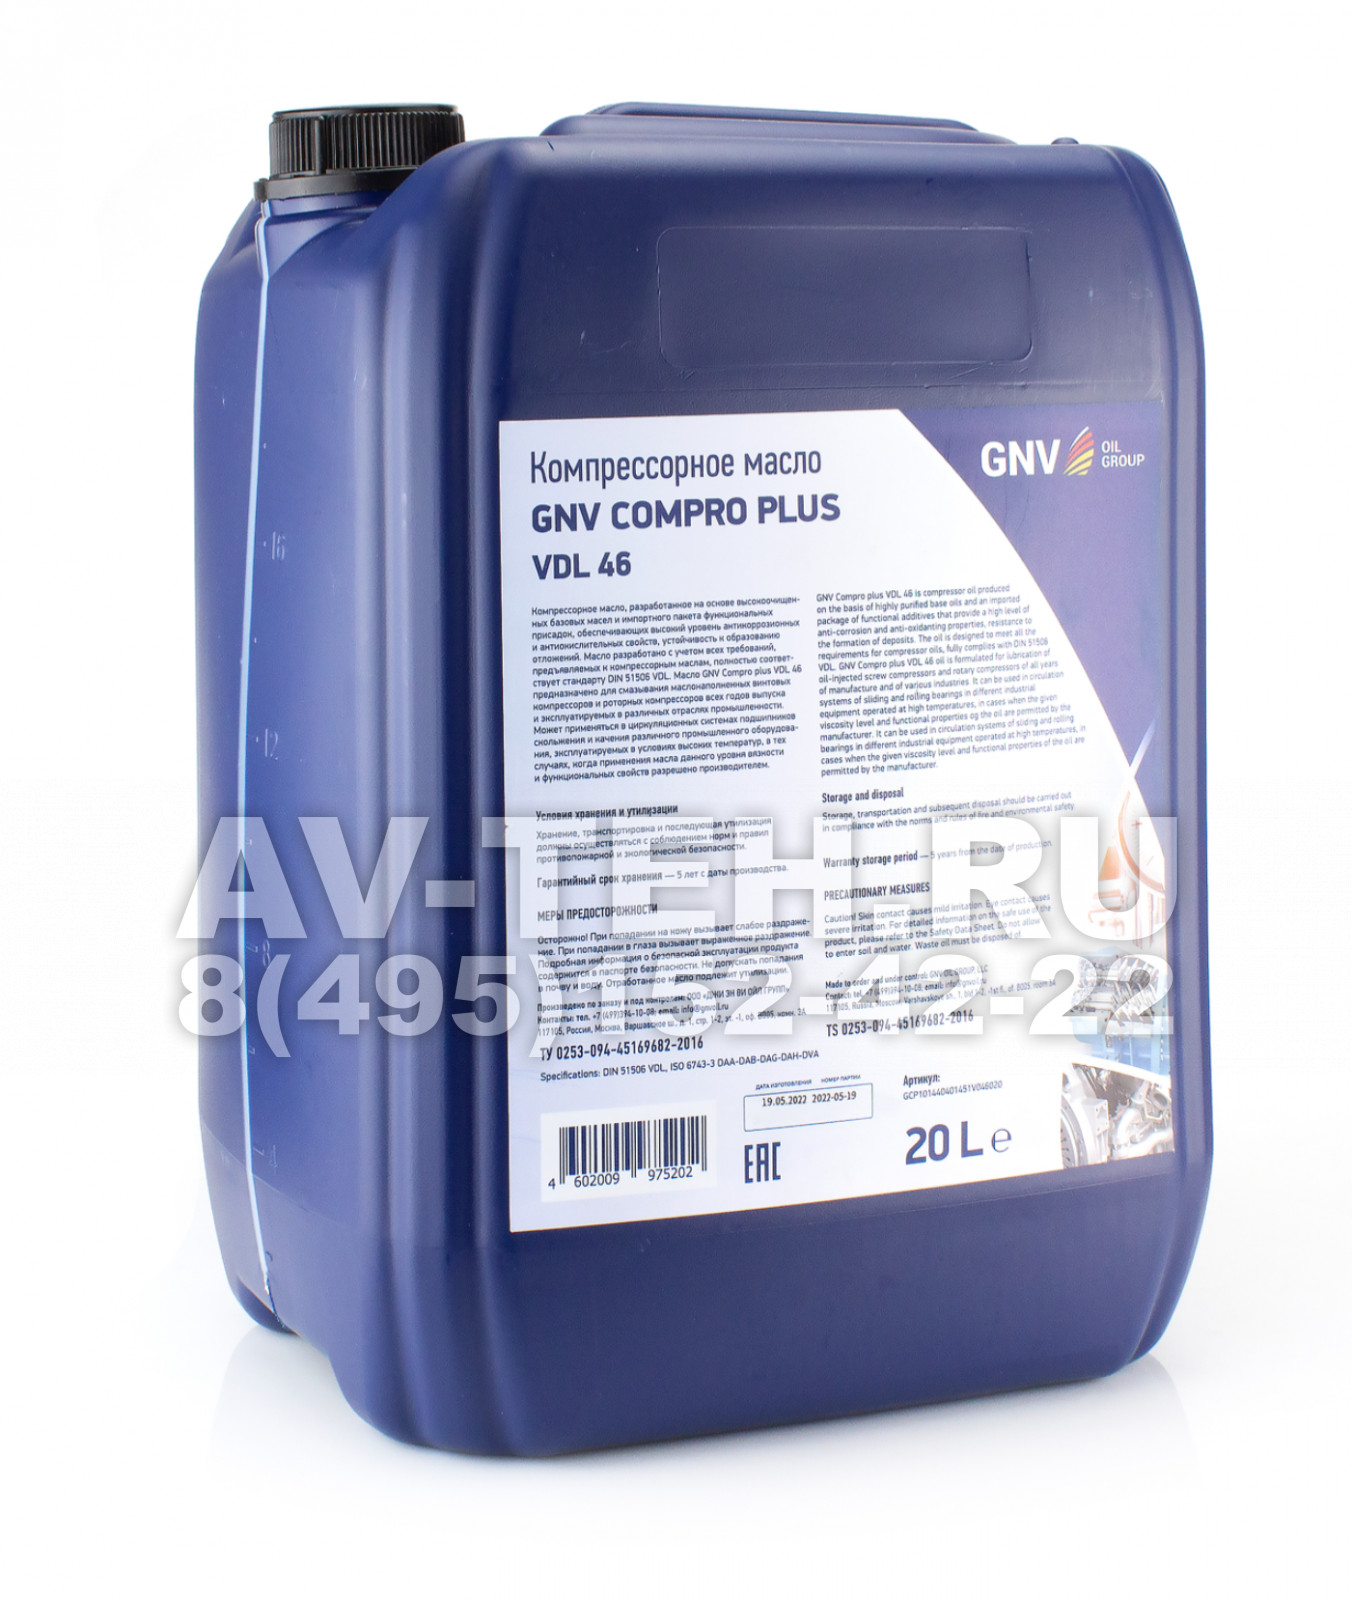 Компрессорное масло GNV Compro plus VDL 46 20L